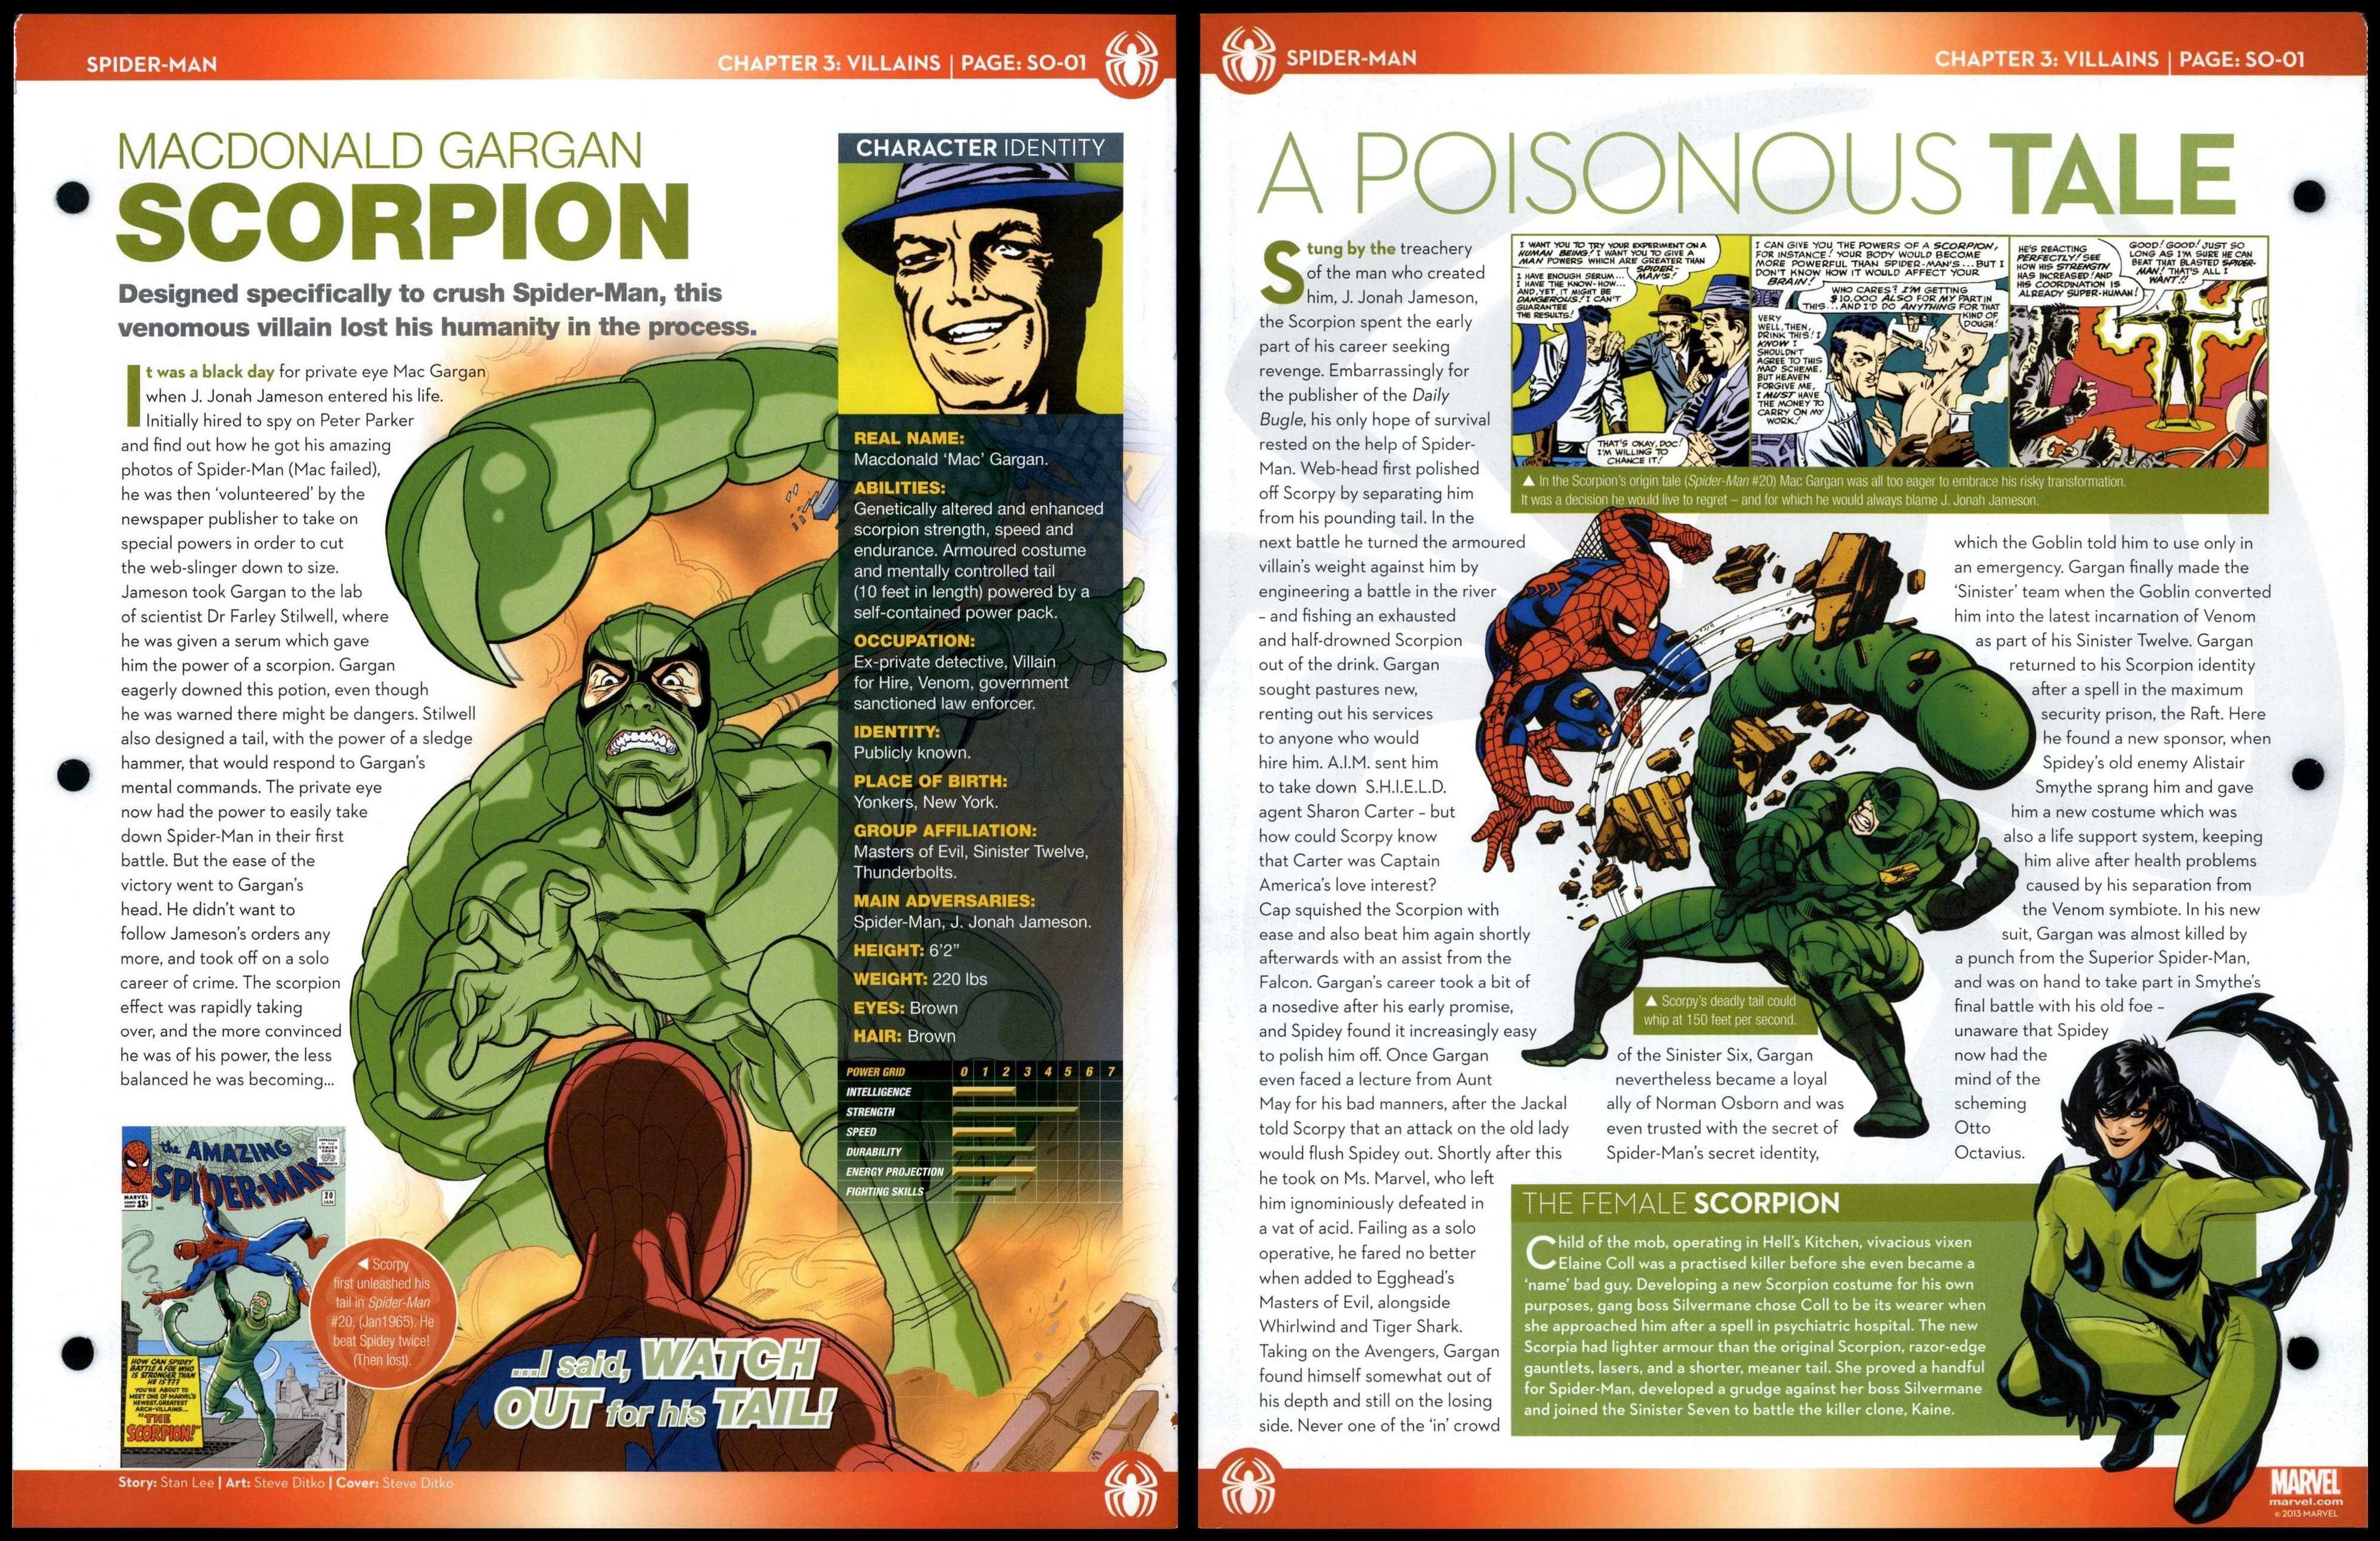 Scorpion - Macdonald Gargan #SO-01 Villains - Spider-Man Marvel Fact File  Page